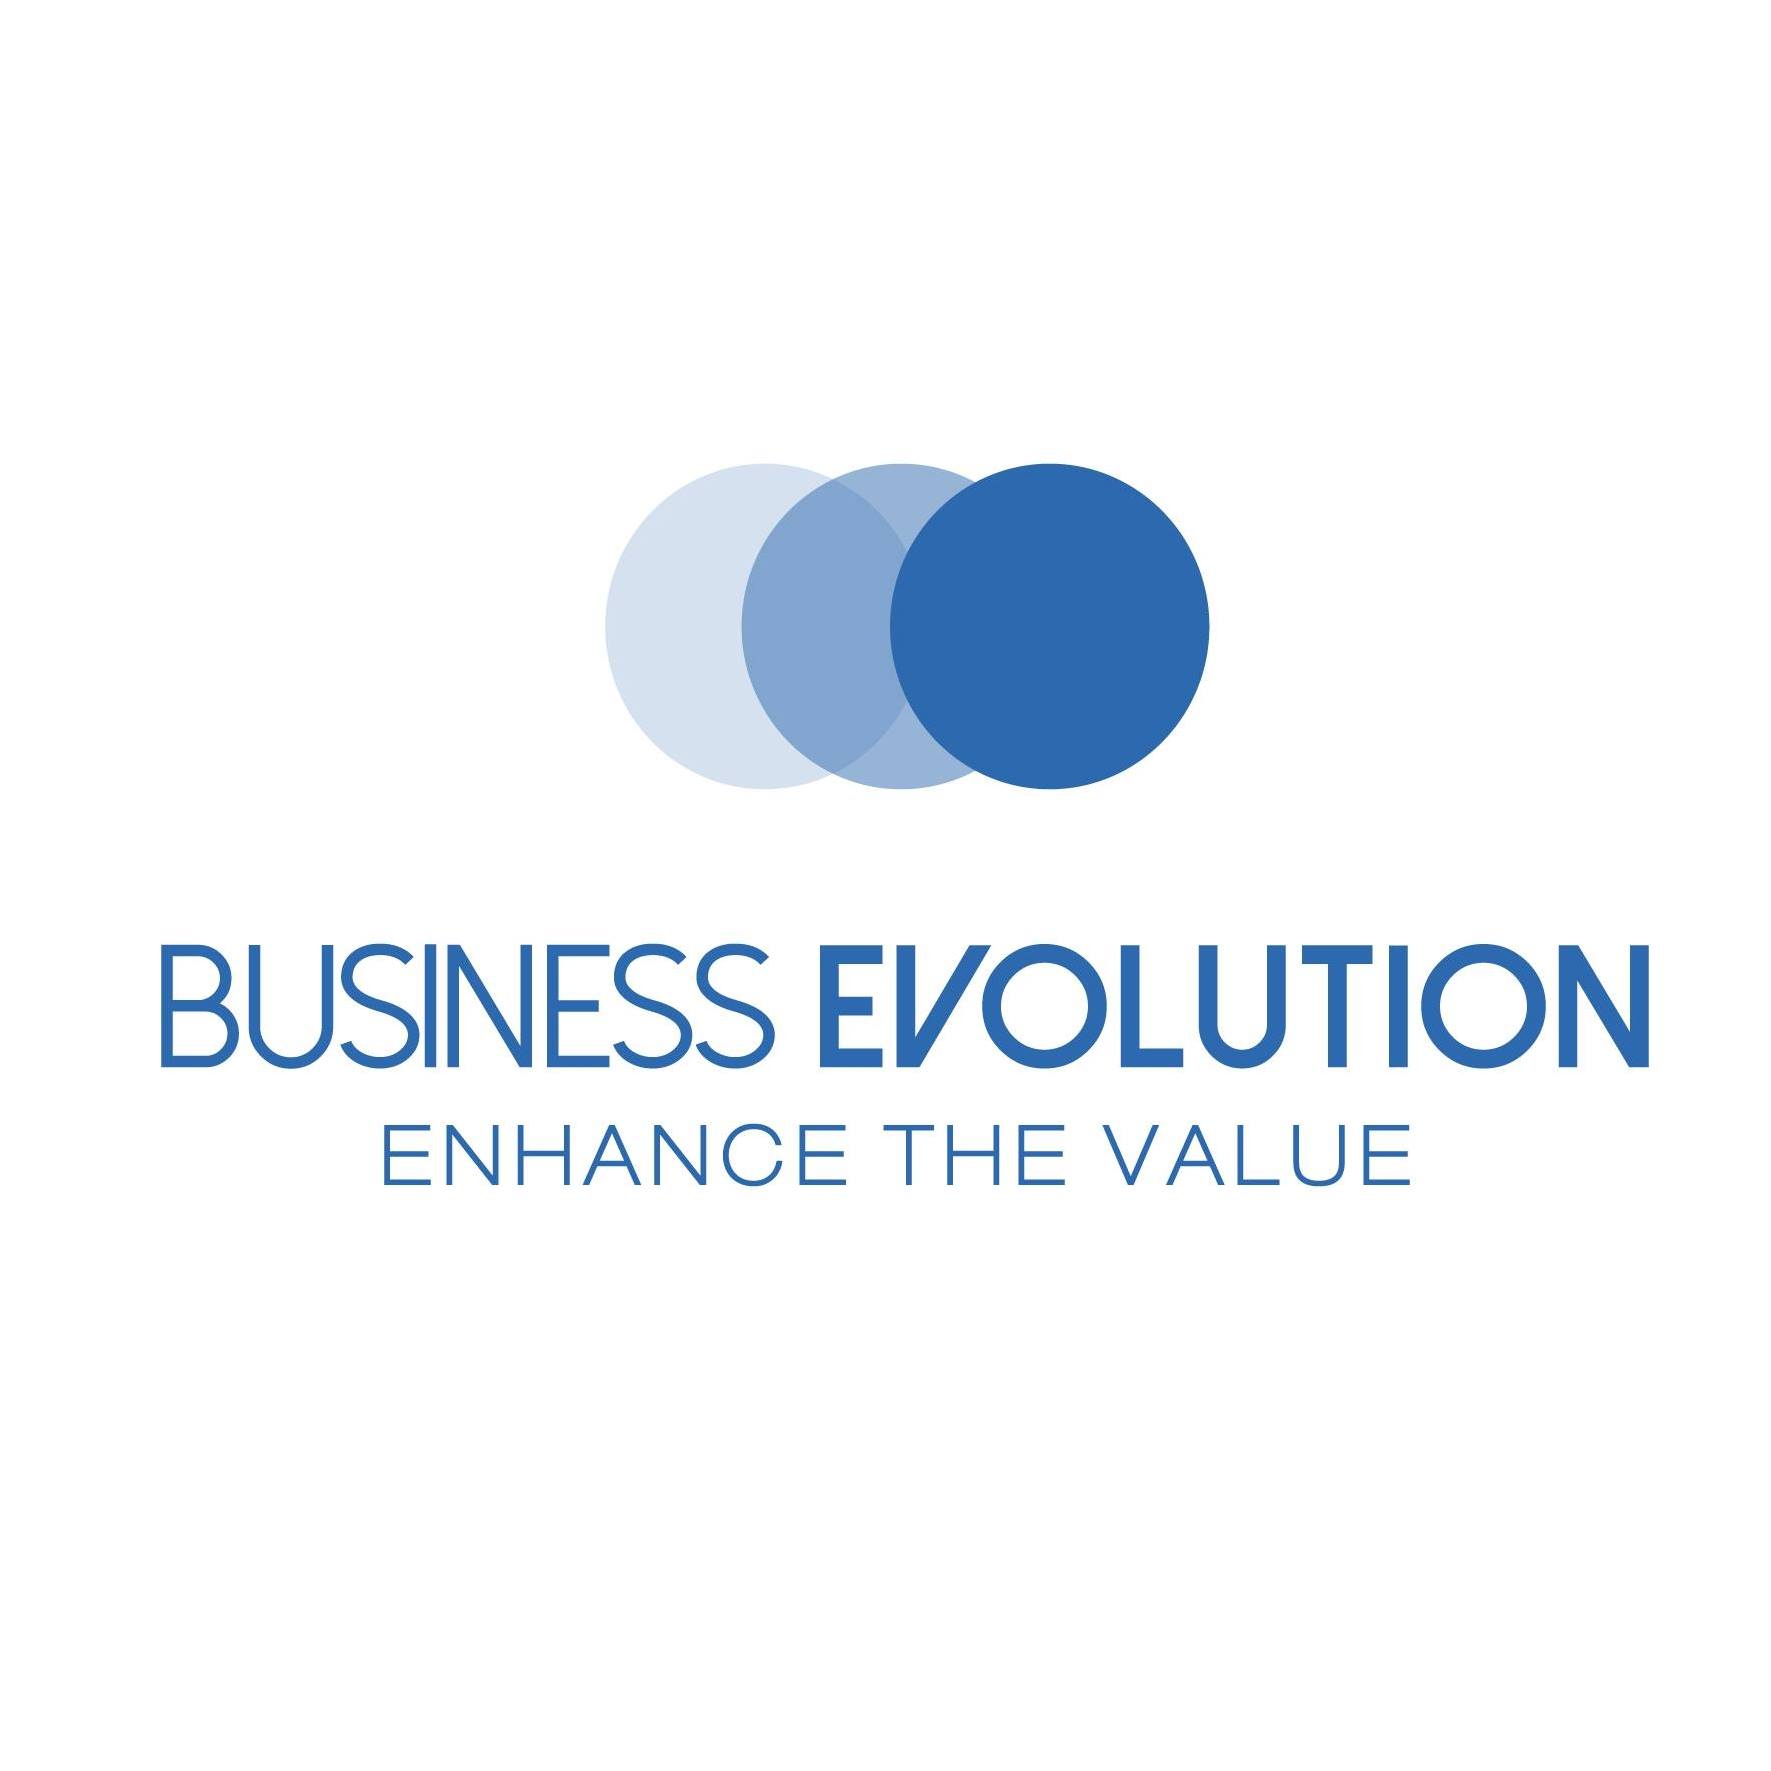 Llc “Business Evolution”